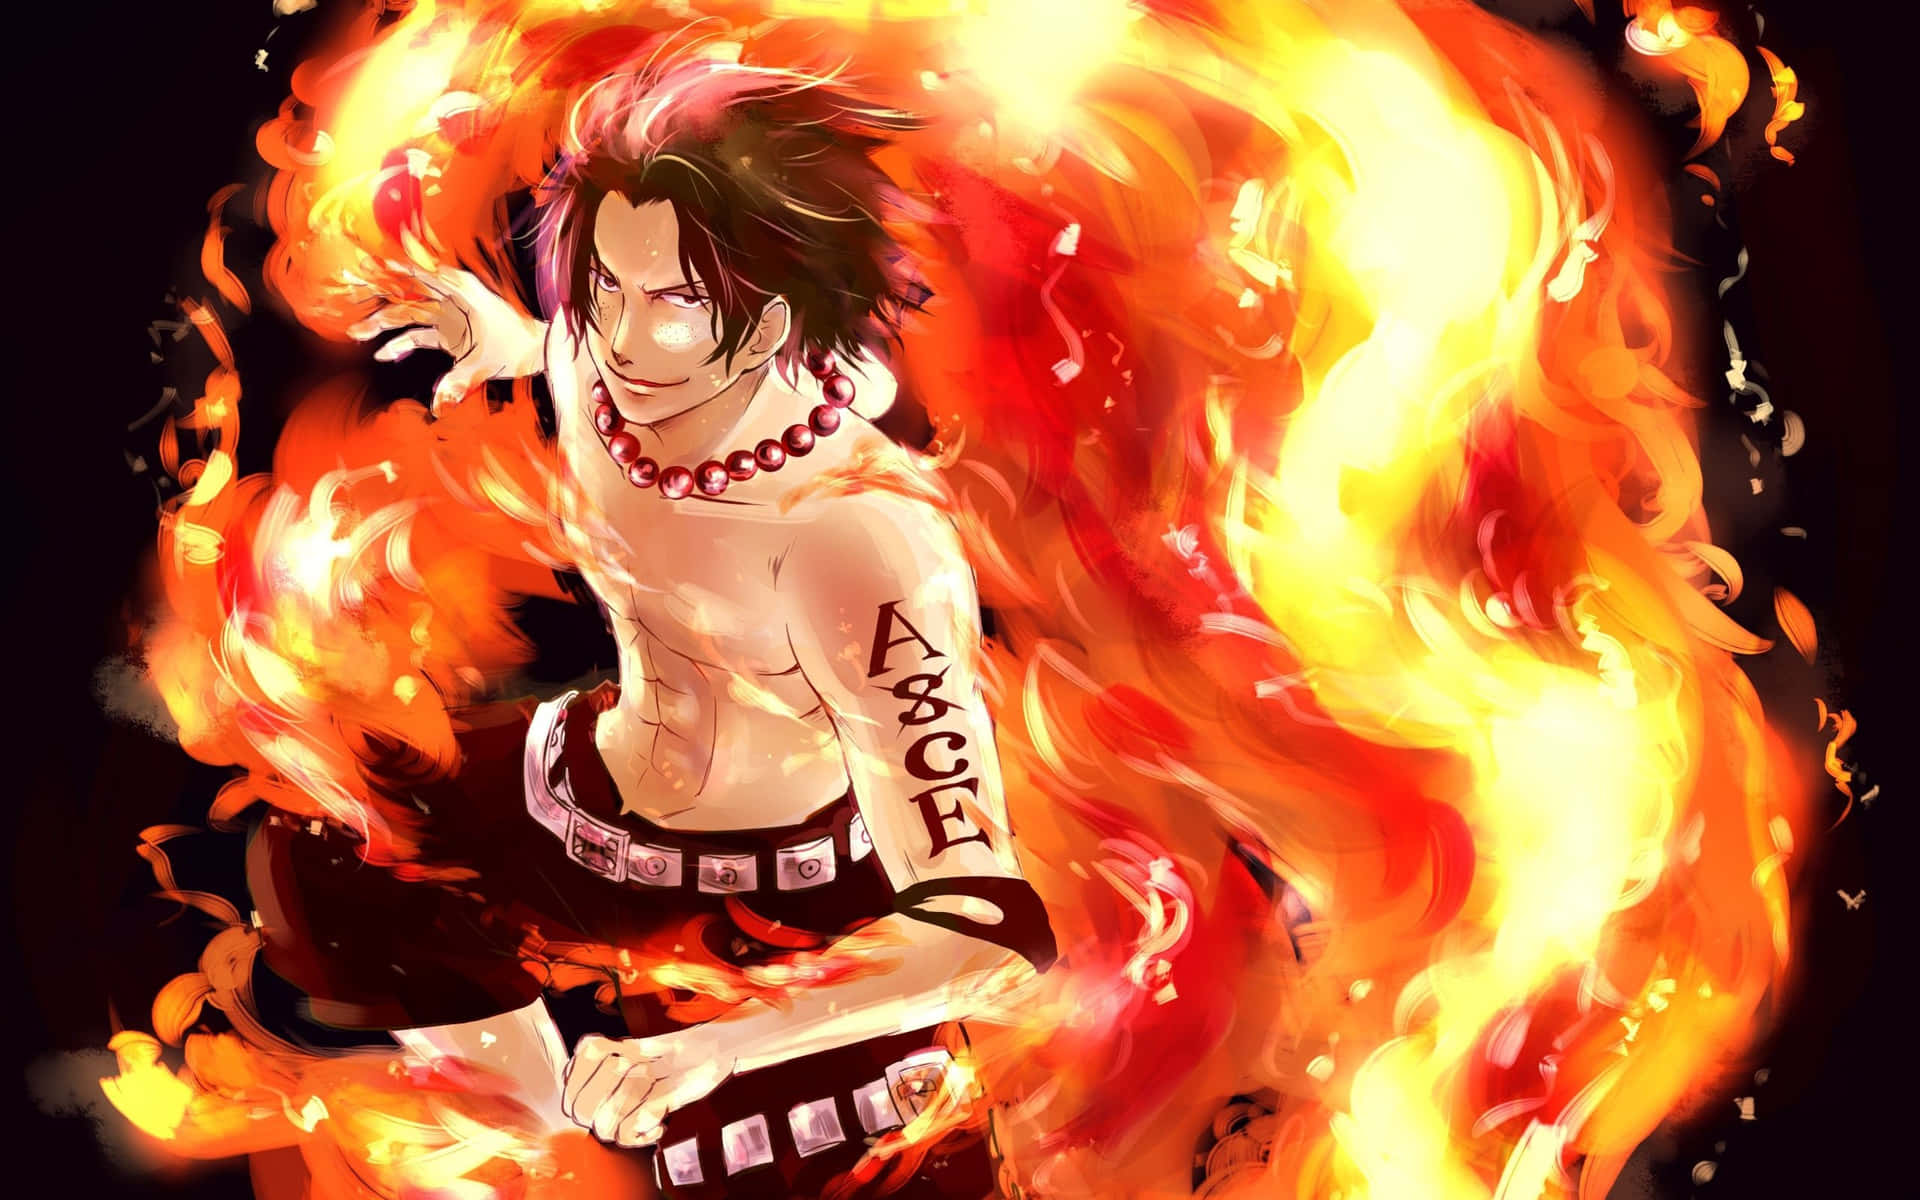 Blaze of flames on a fiery background